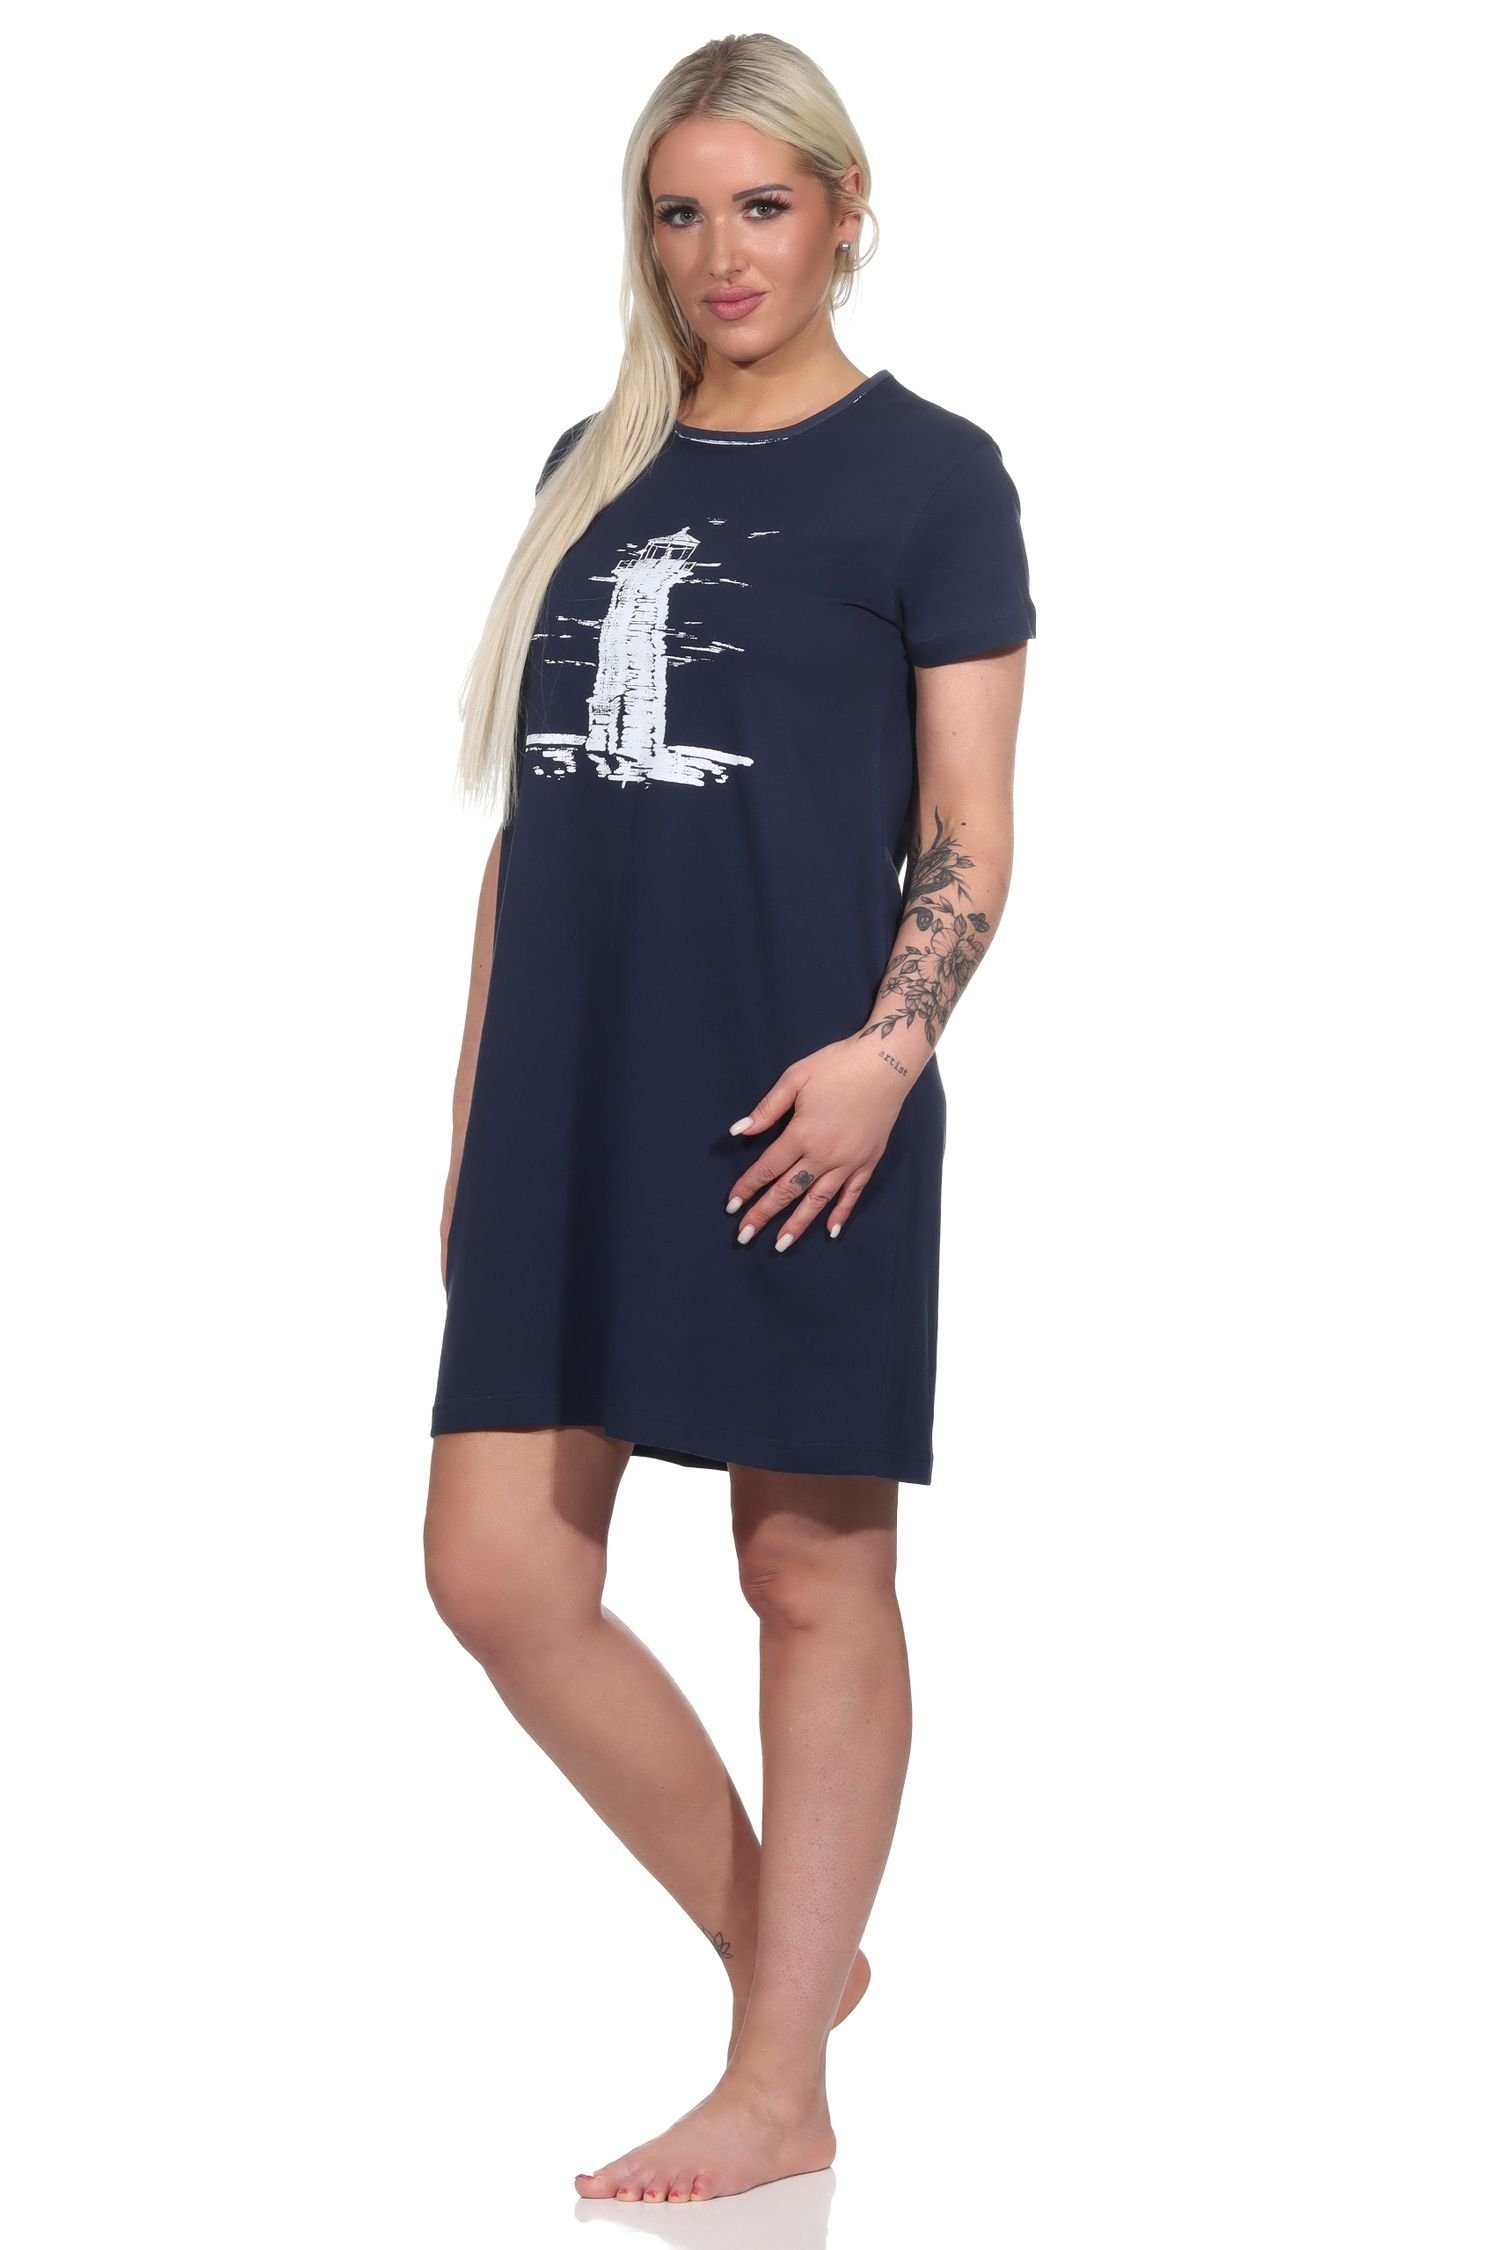 Normann Nachthemd Maritimes Motiv Damen mit Leuchtturm marine kurzarm Nachthemd